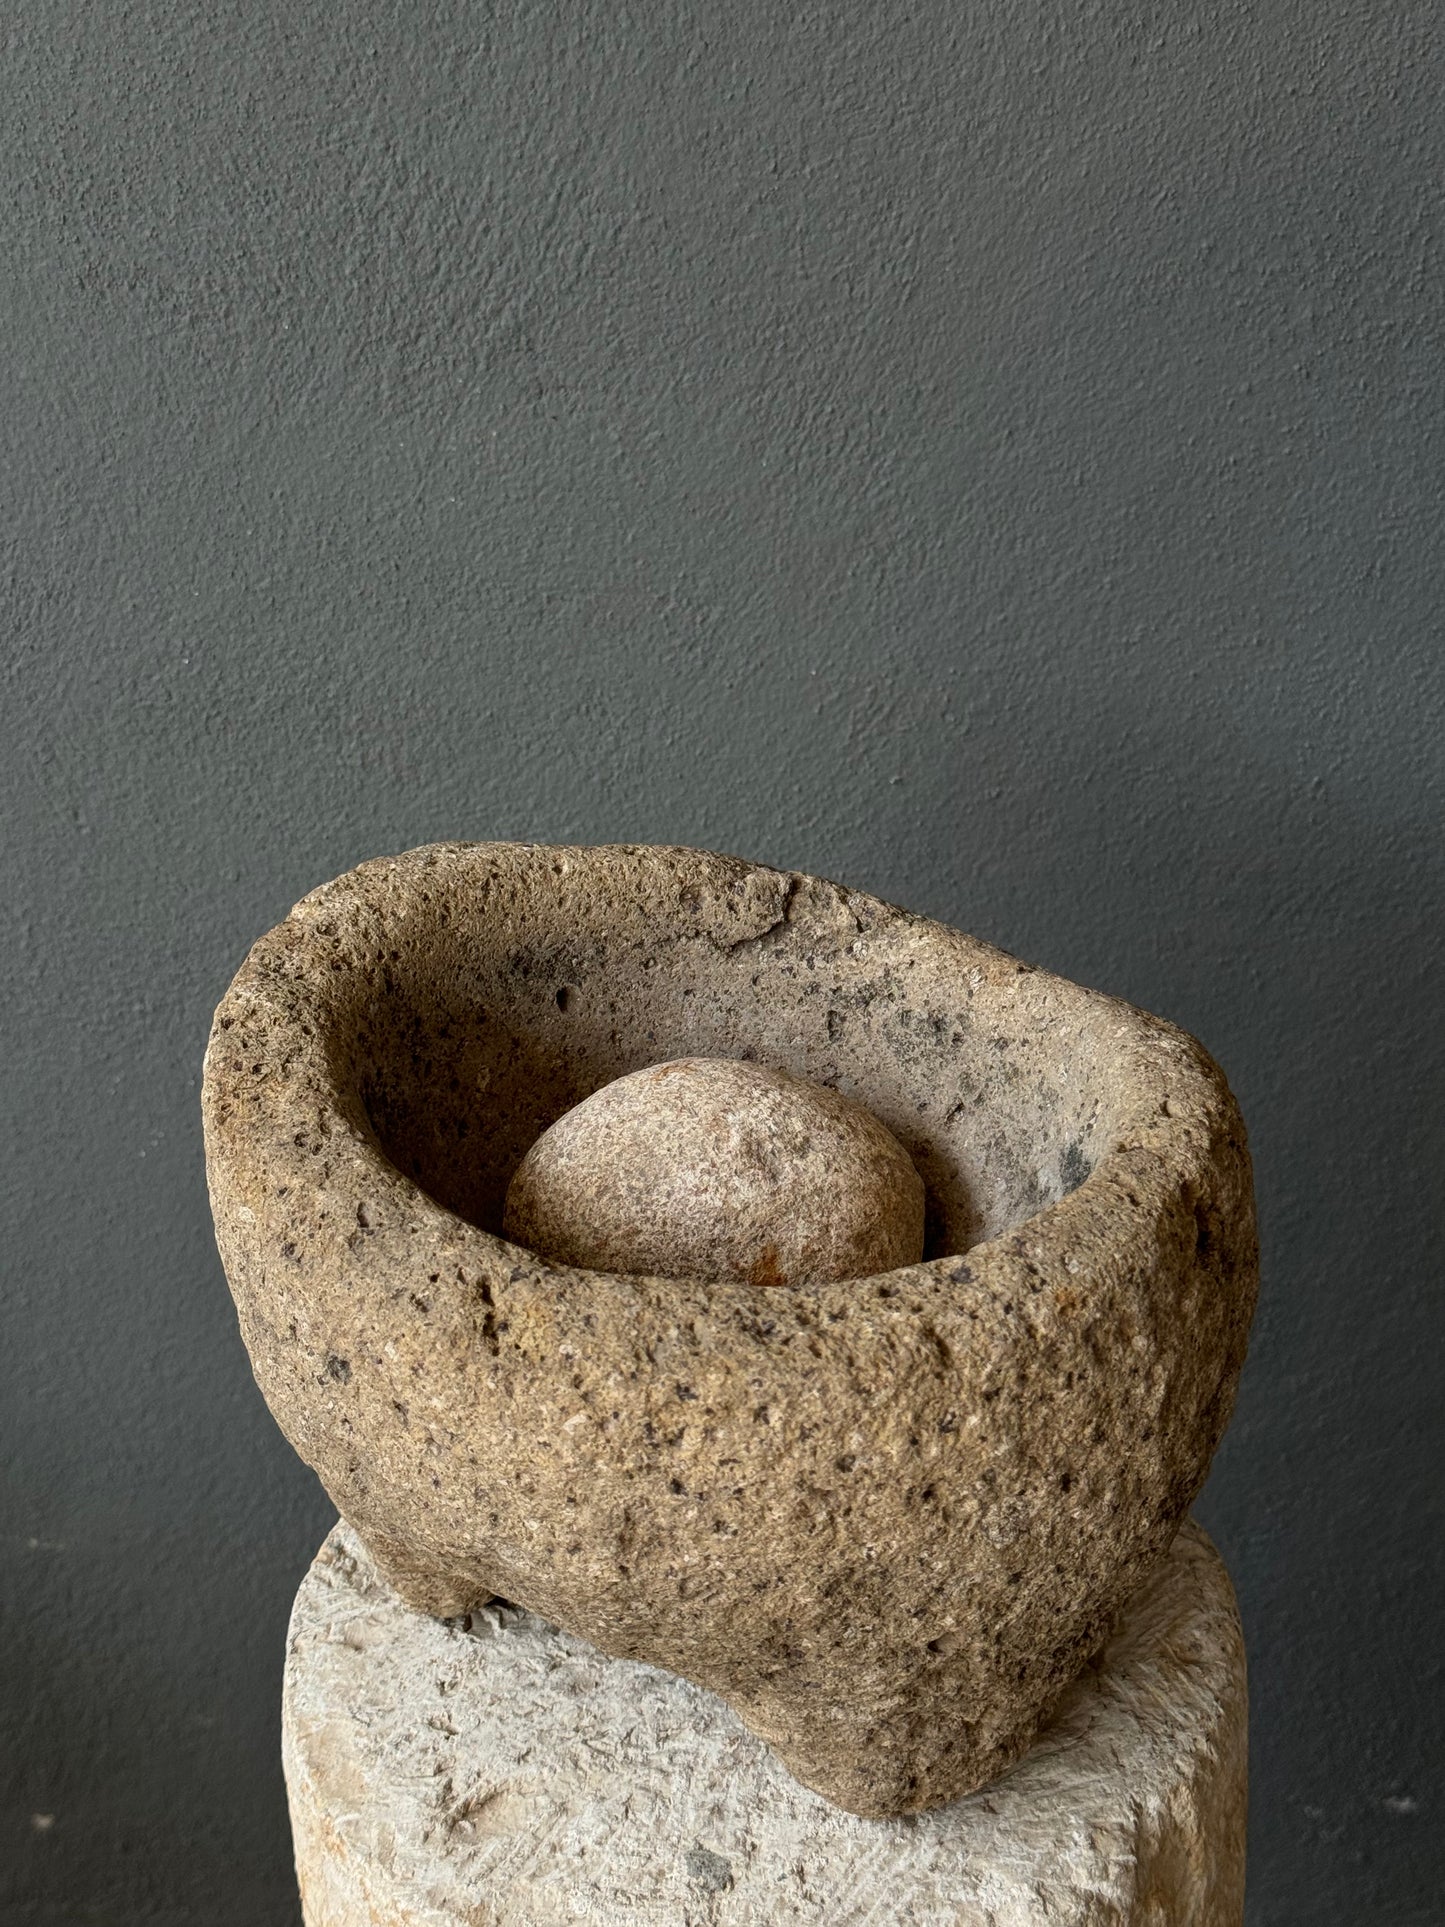 Stone Mortar From San Luis Potosí, Mexico / Molcajete Antiguo De San Luis Potosí